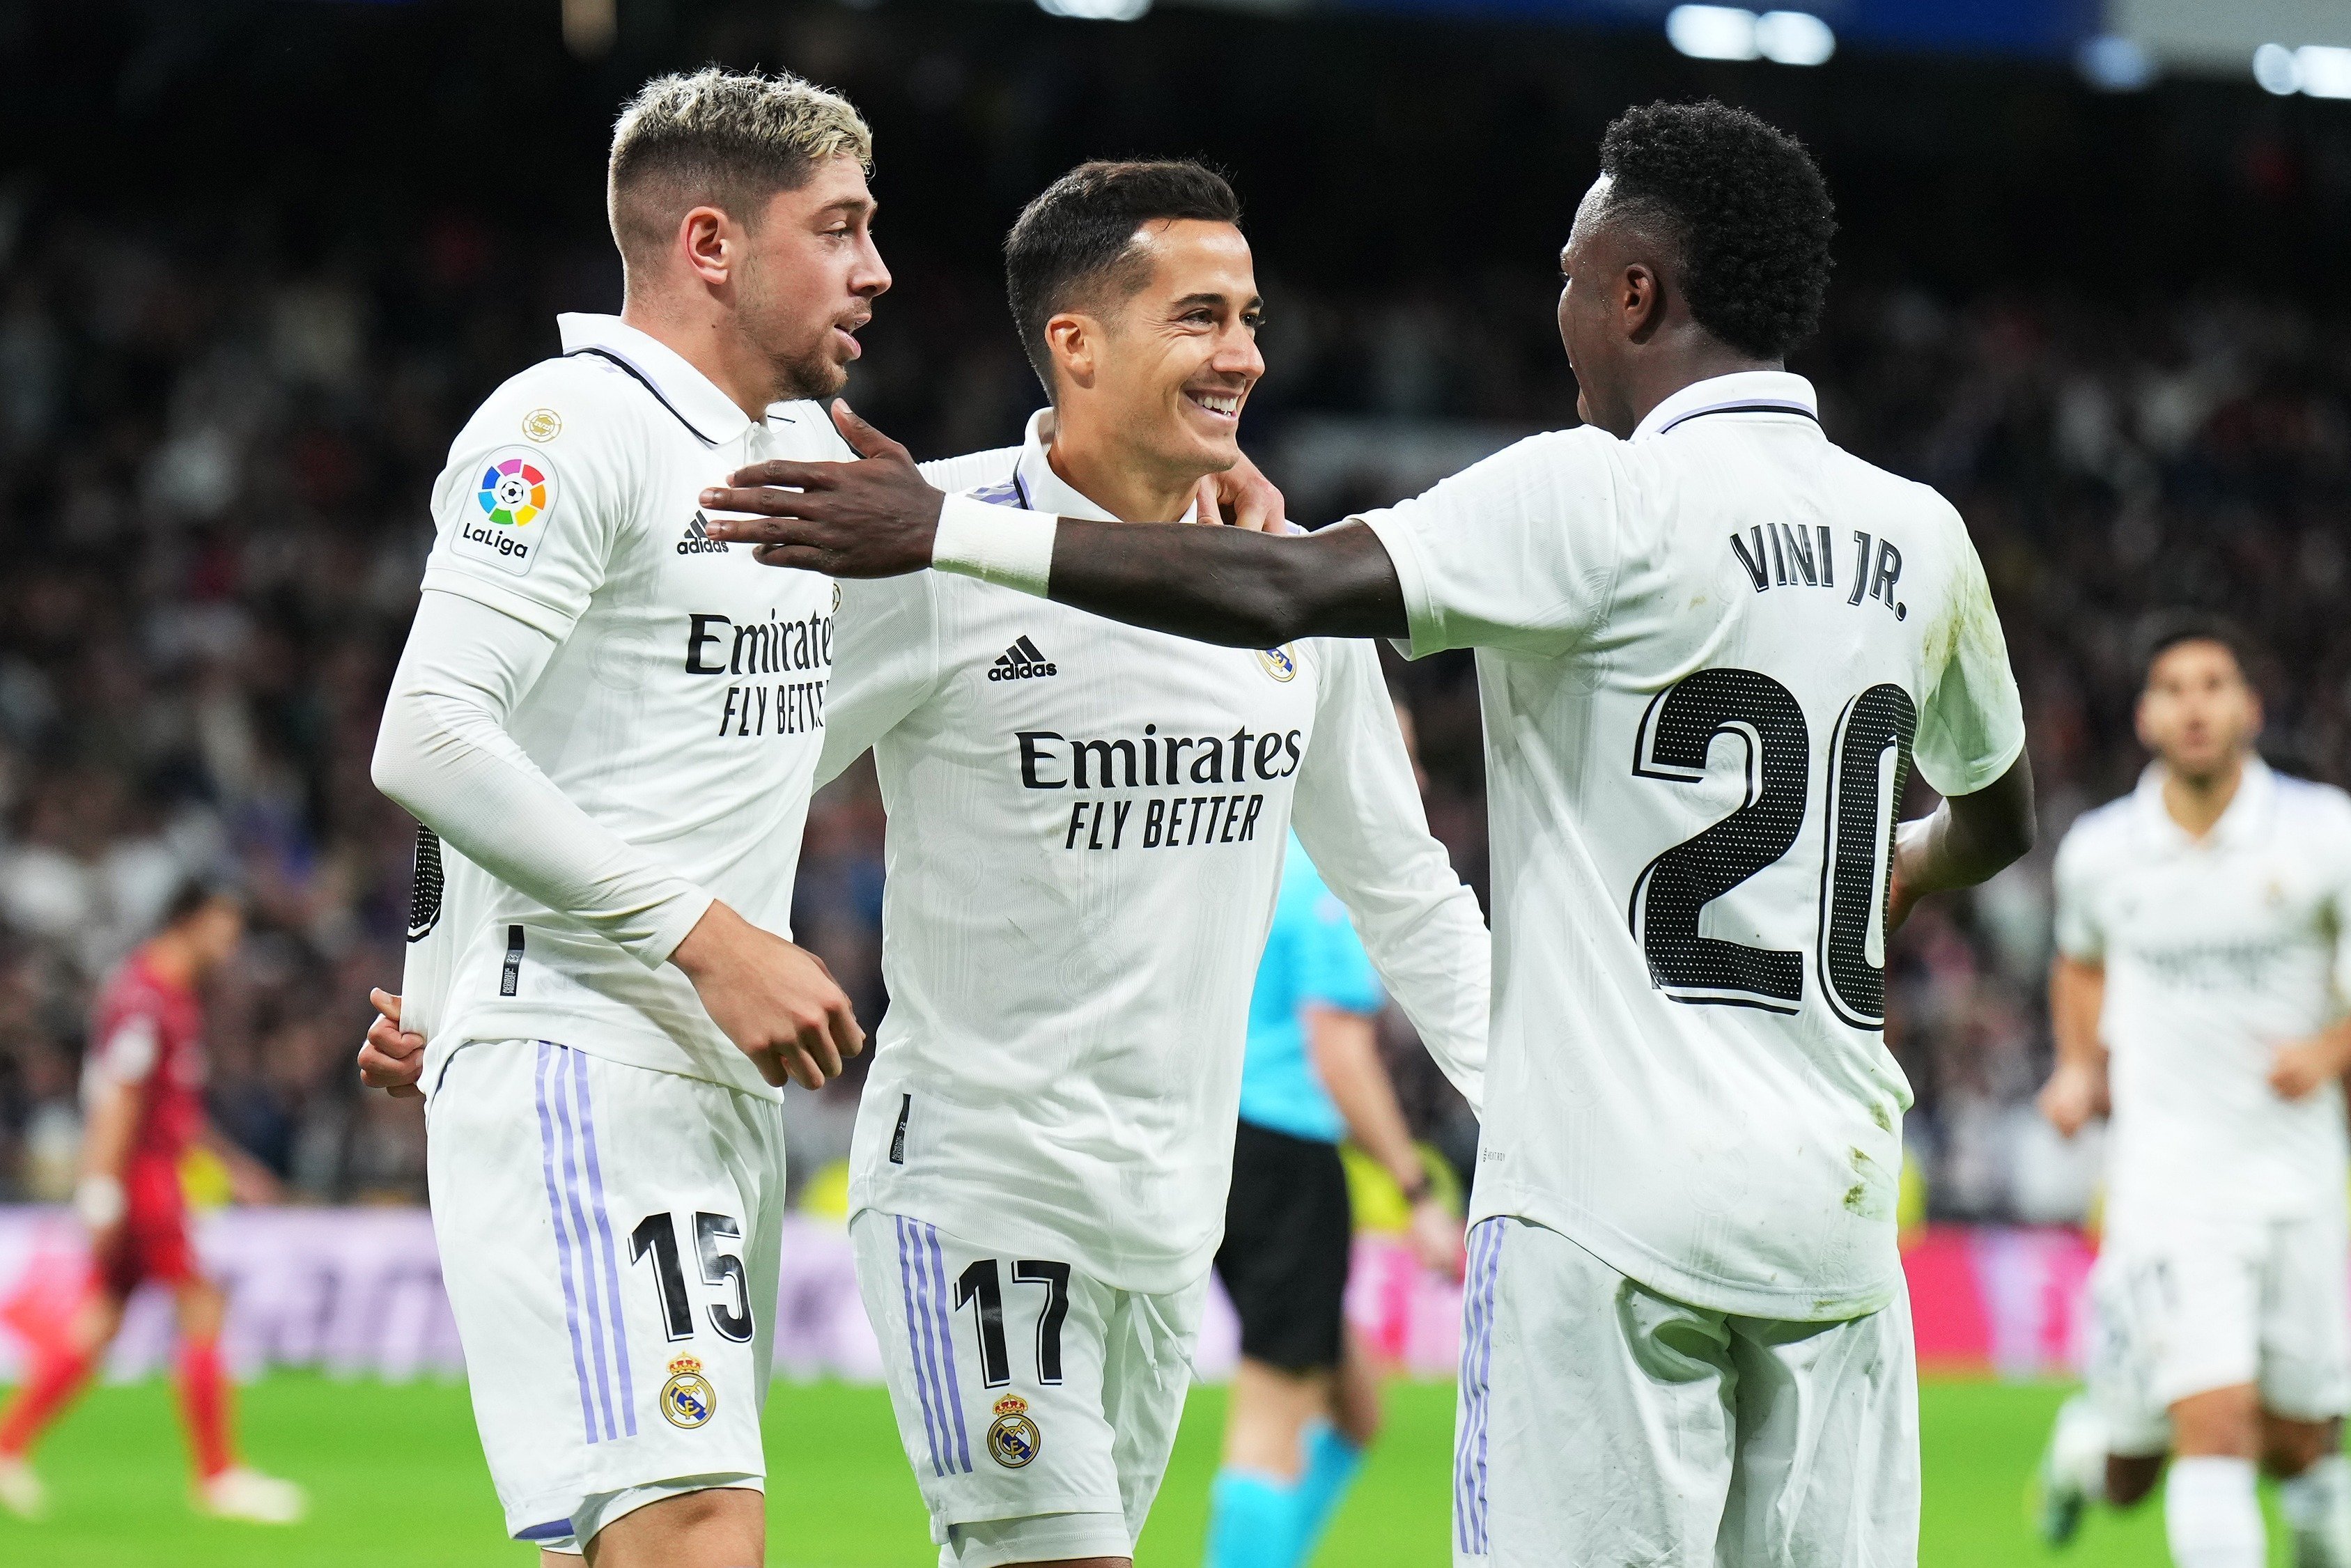 Real Madrid unbeaten in 20 games